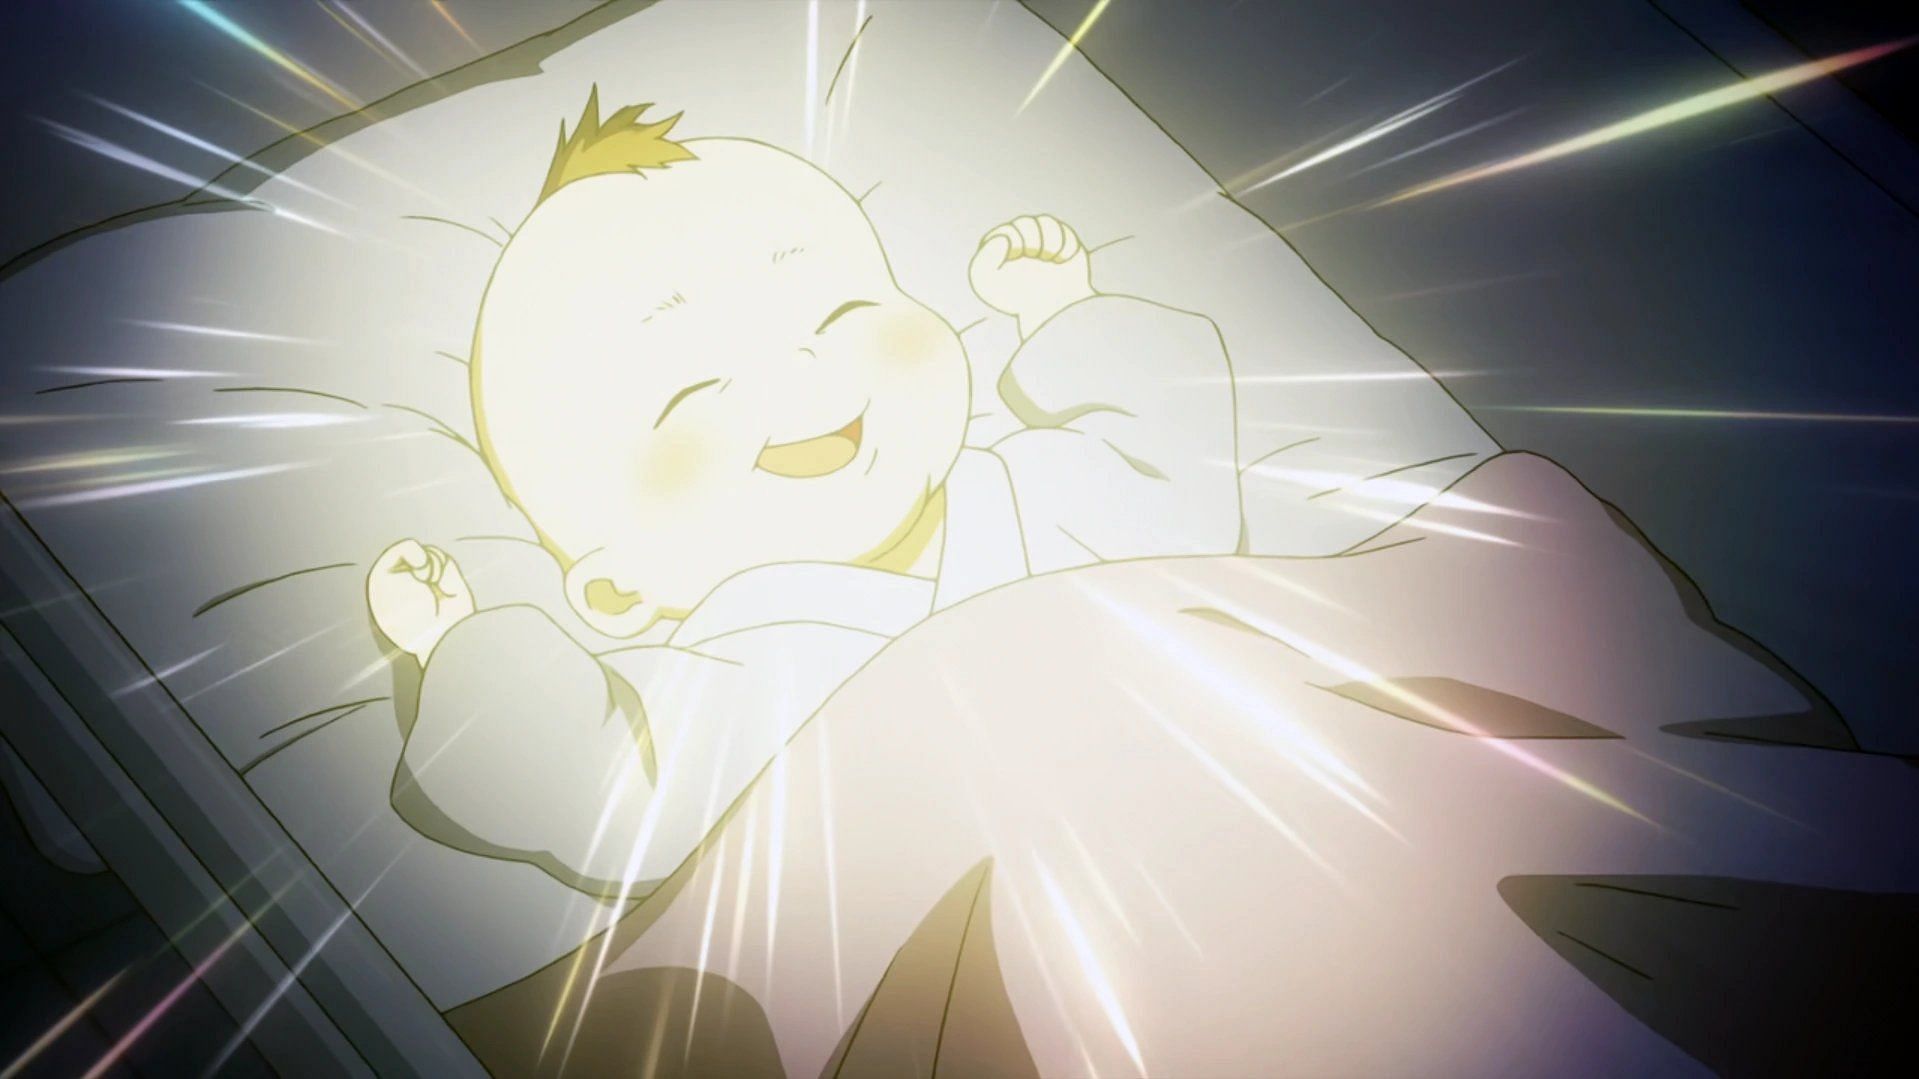 The Luminiscent baby as seen in the anime (Image via Studio Bones)